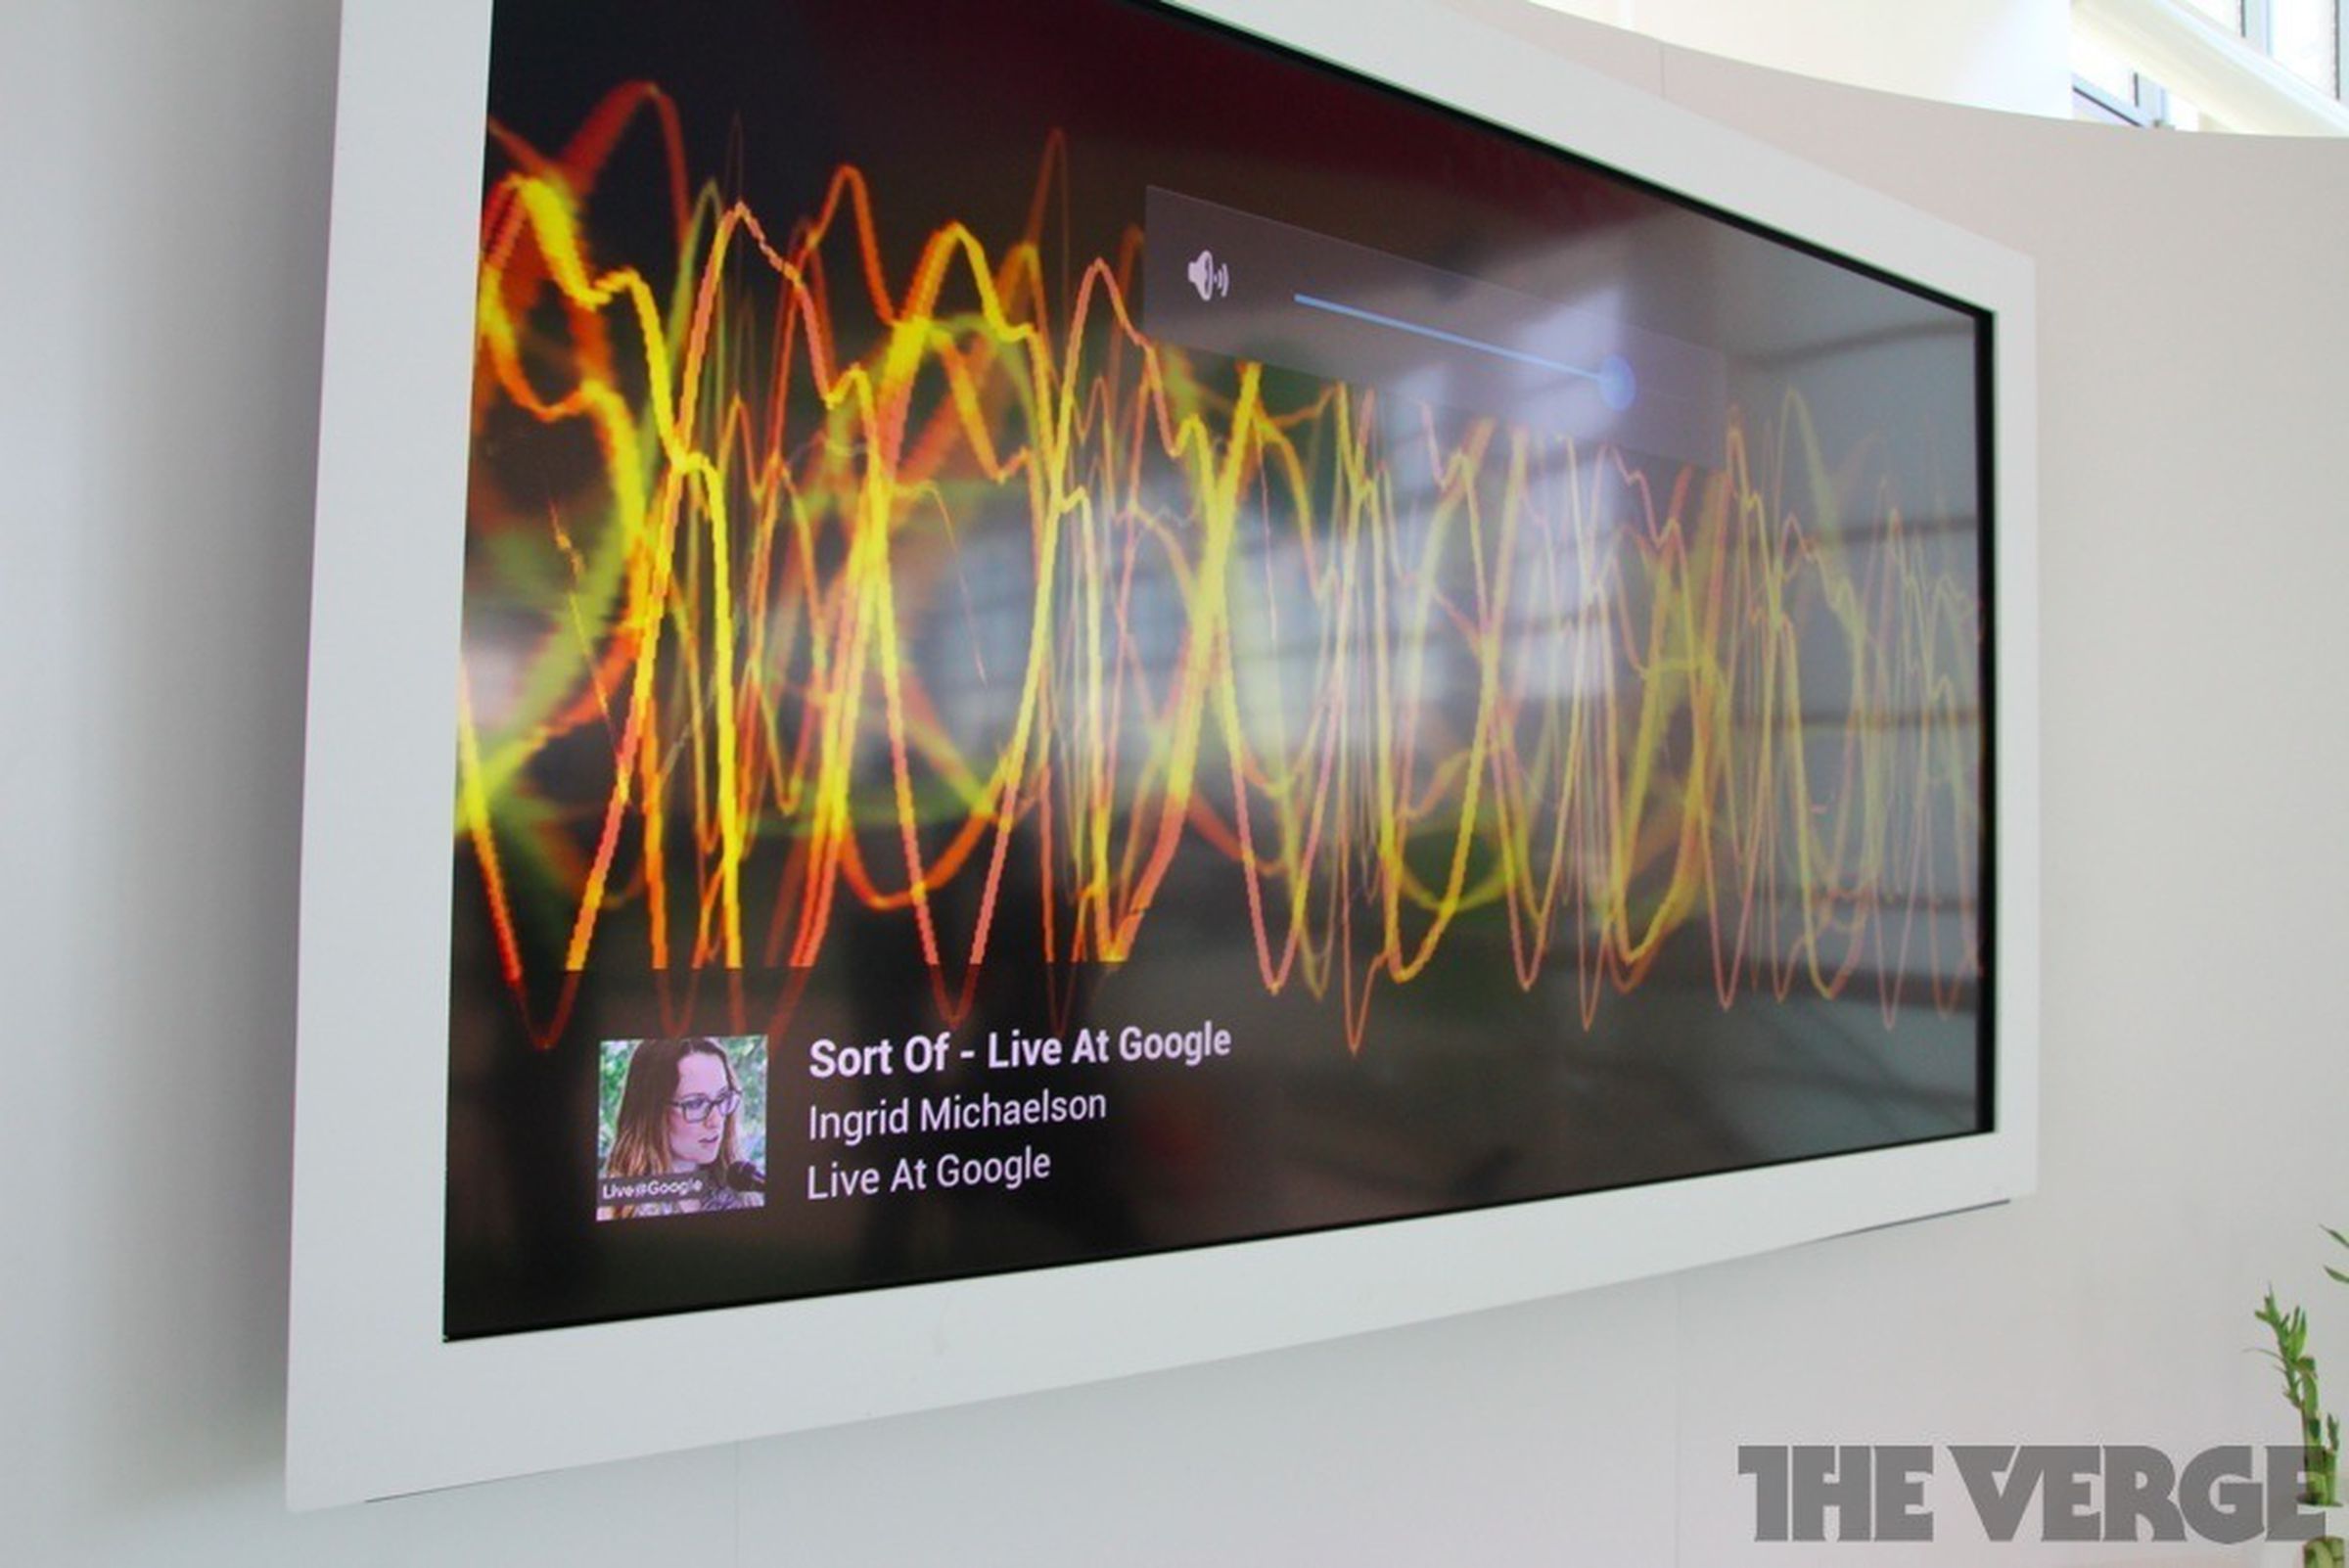 Google Nexus Q media streamer hands-on pictures